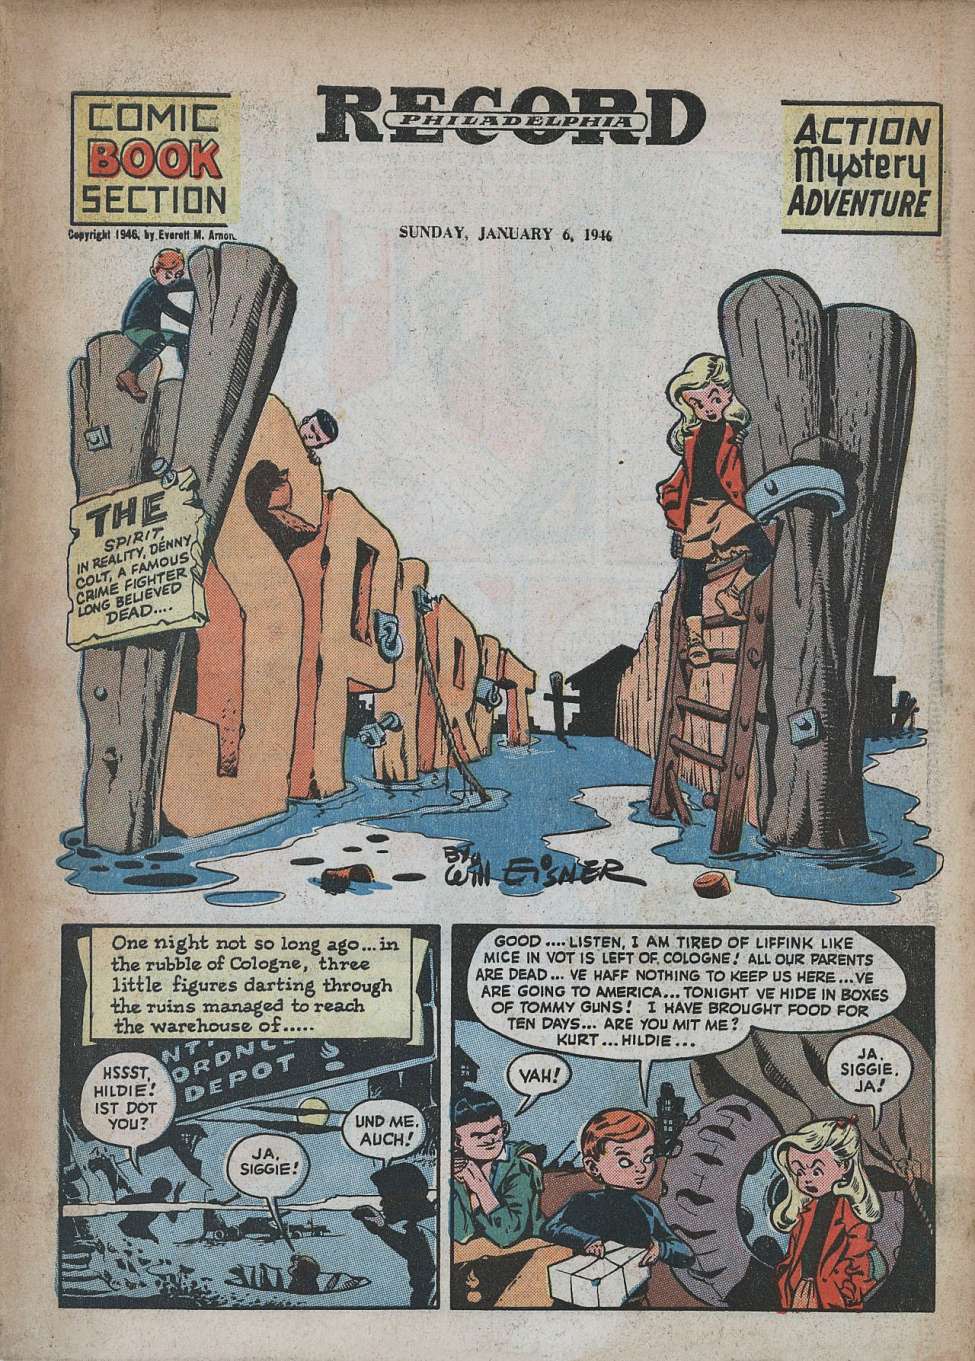 Comic Book Cover For The Spirit (1946-01-06) - Philadelphia Record